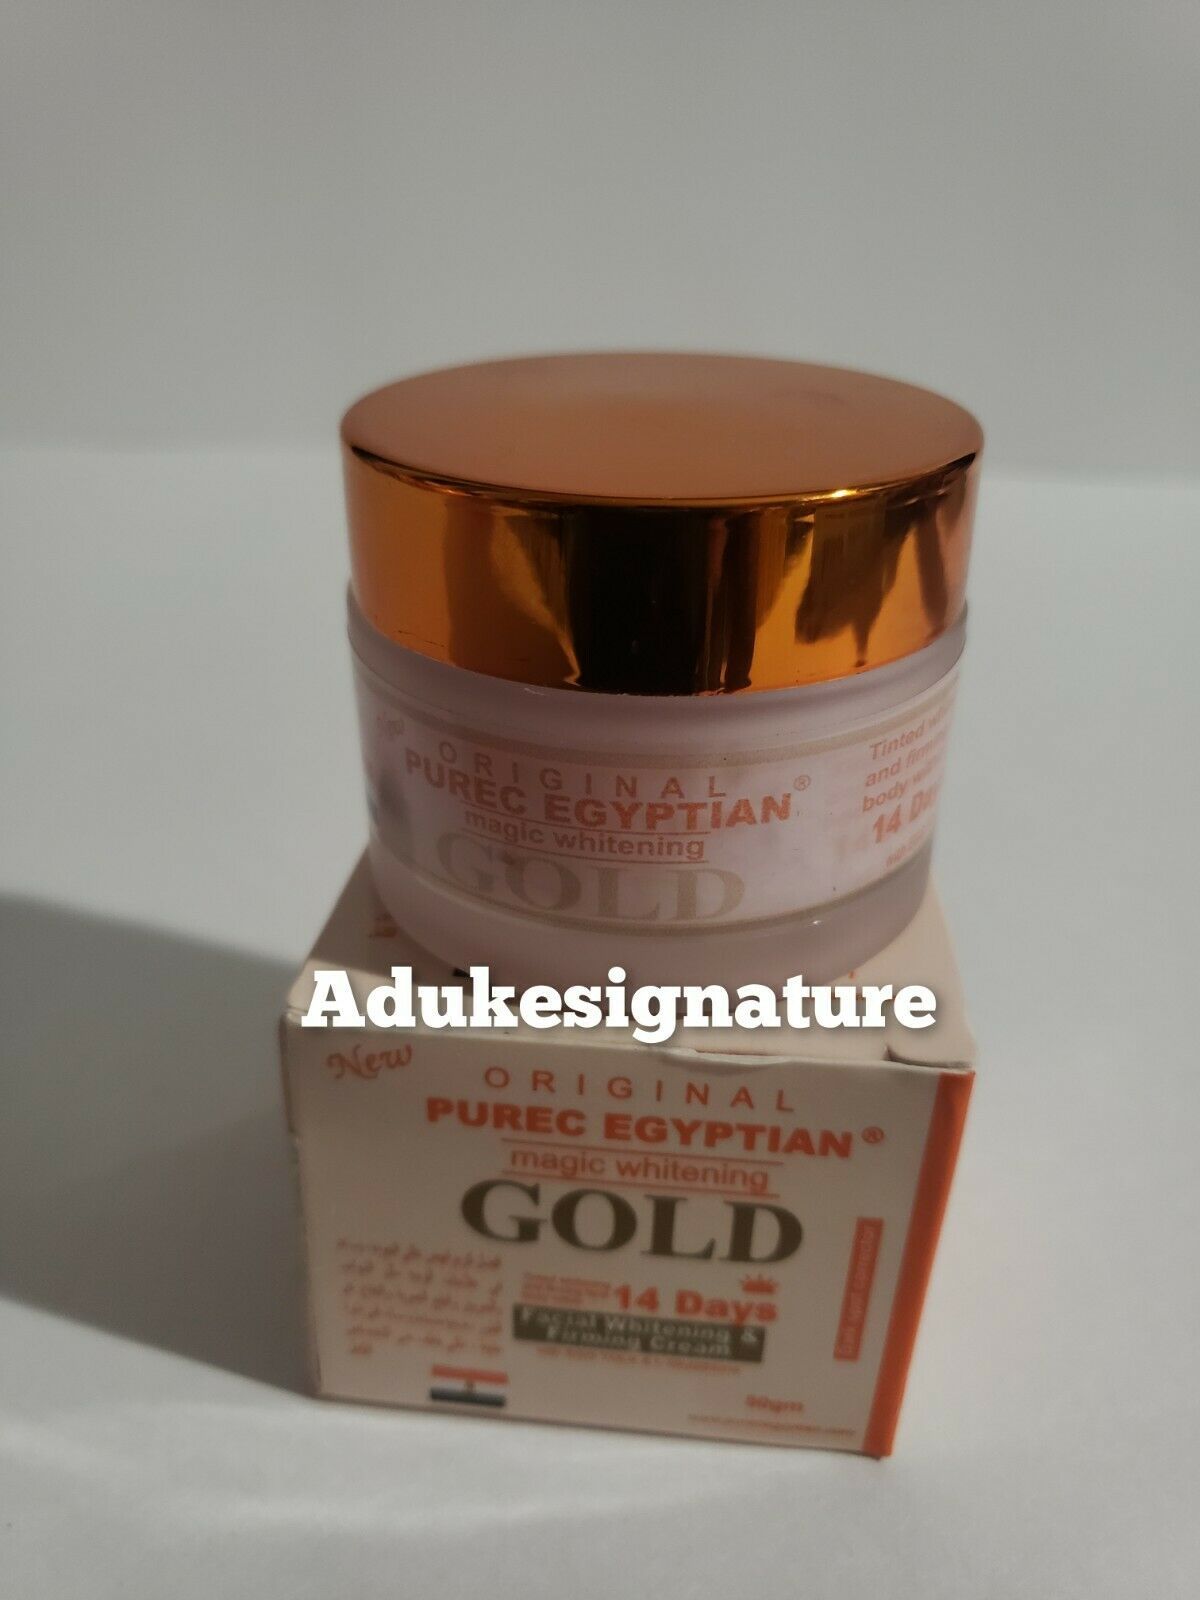 purec egyptian magic whitening gold facial whitening cream 50g - $24.00